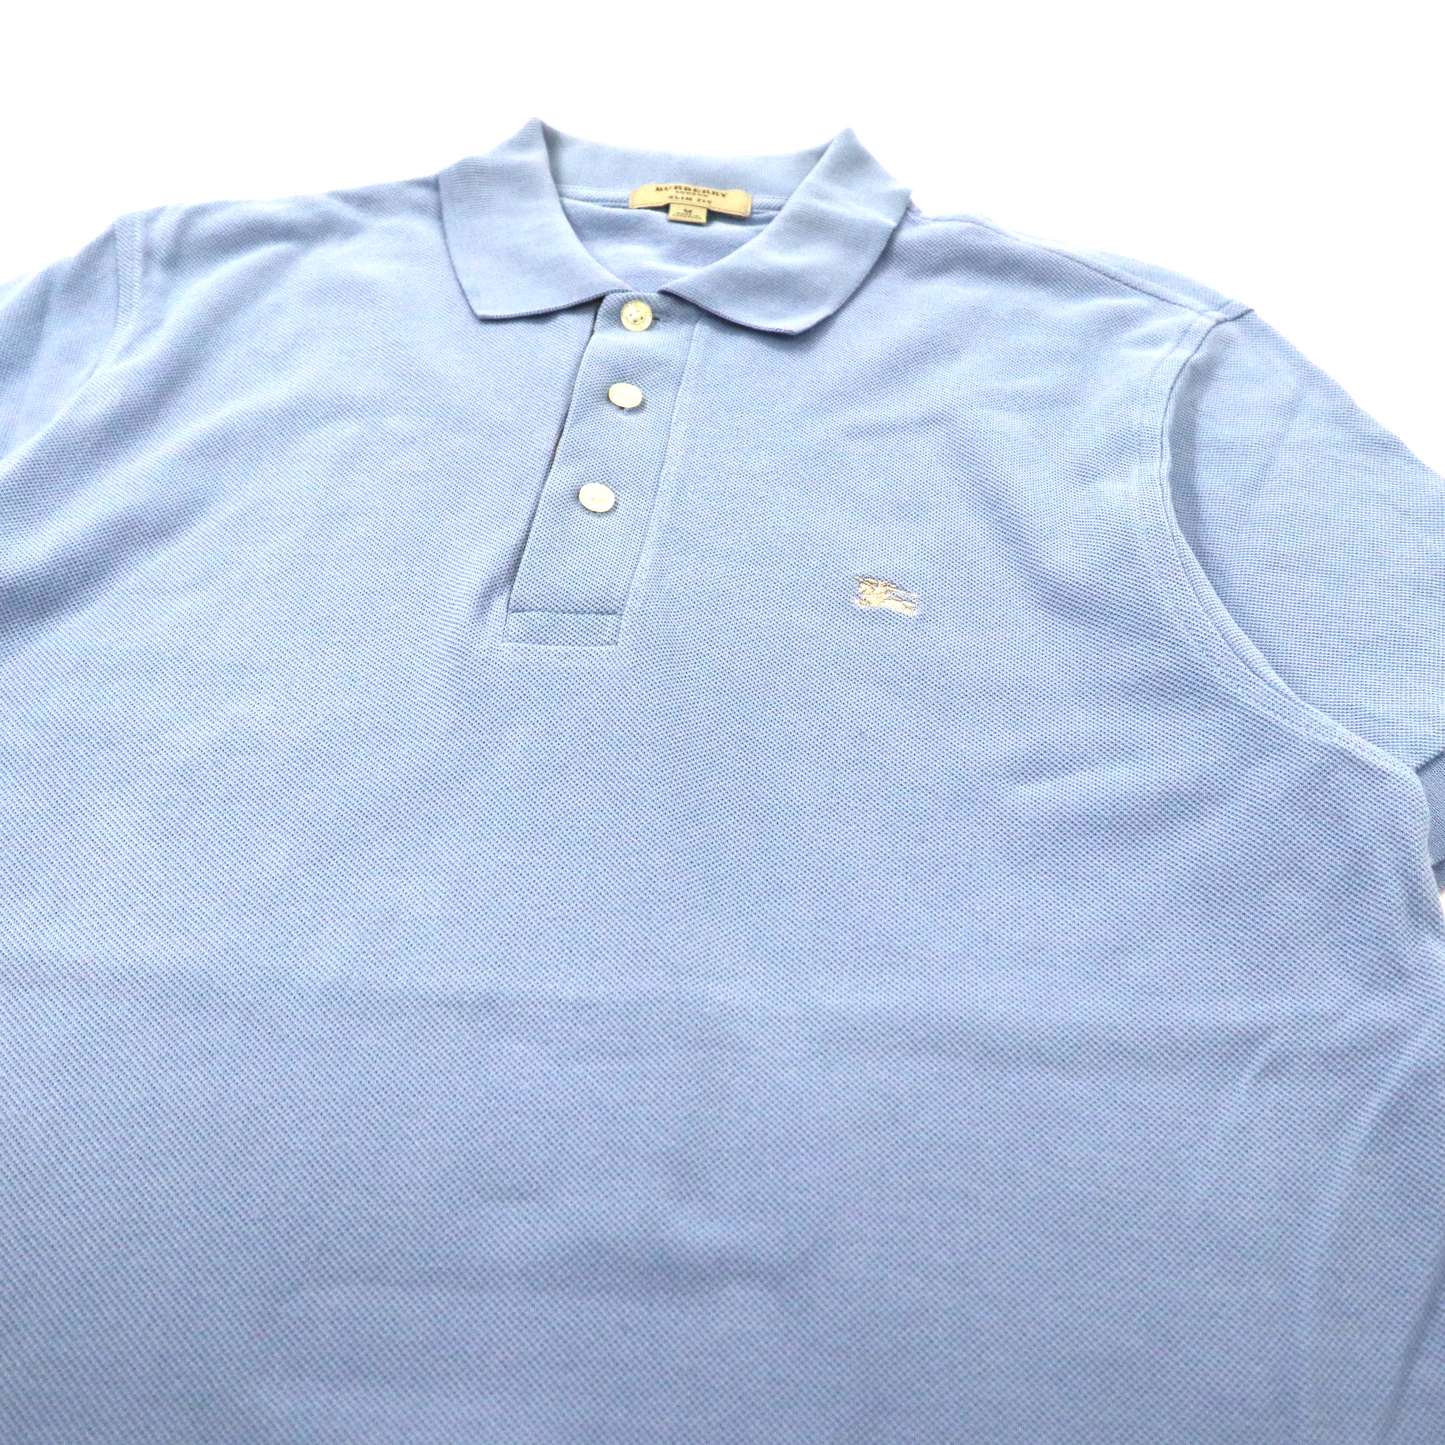 BURBERRY ポロシャツ M ブルー コットン ノバチェック切替 SLIM FIT ワンポイントロゴ刺繍